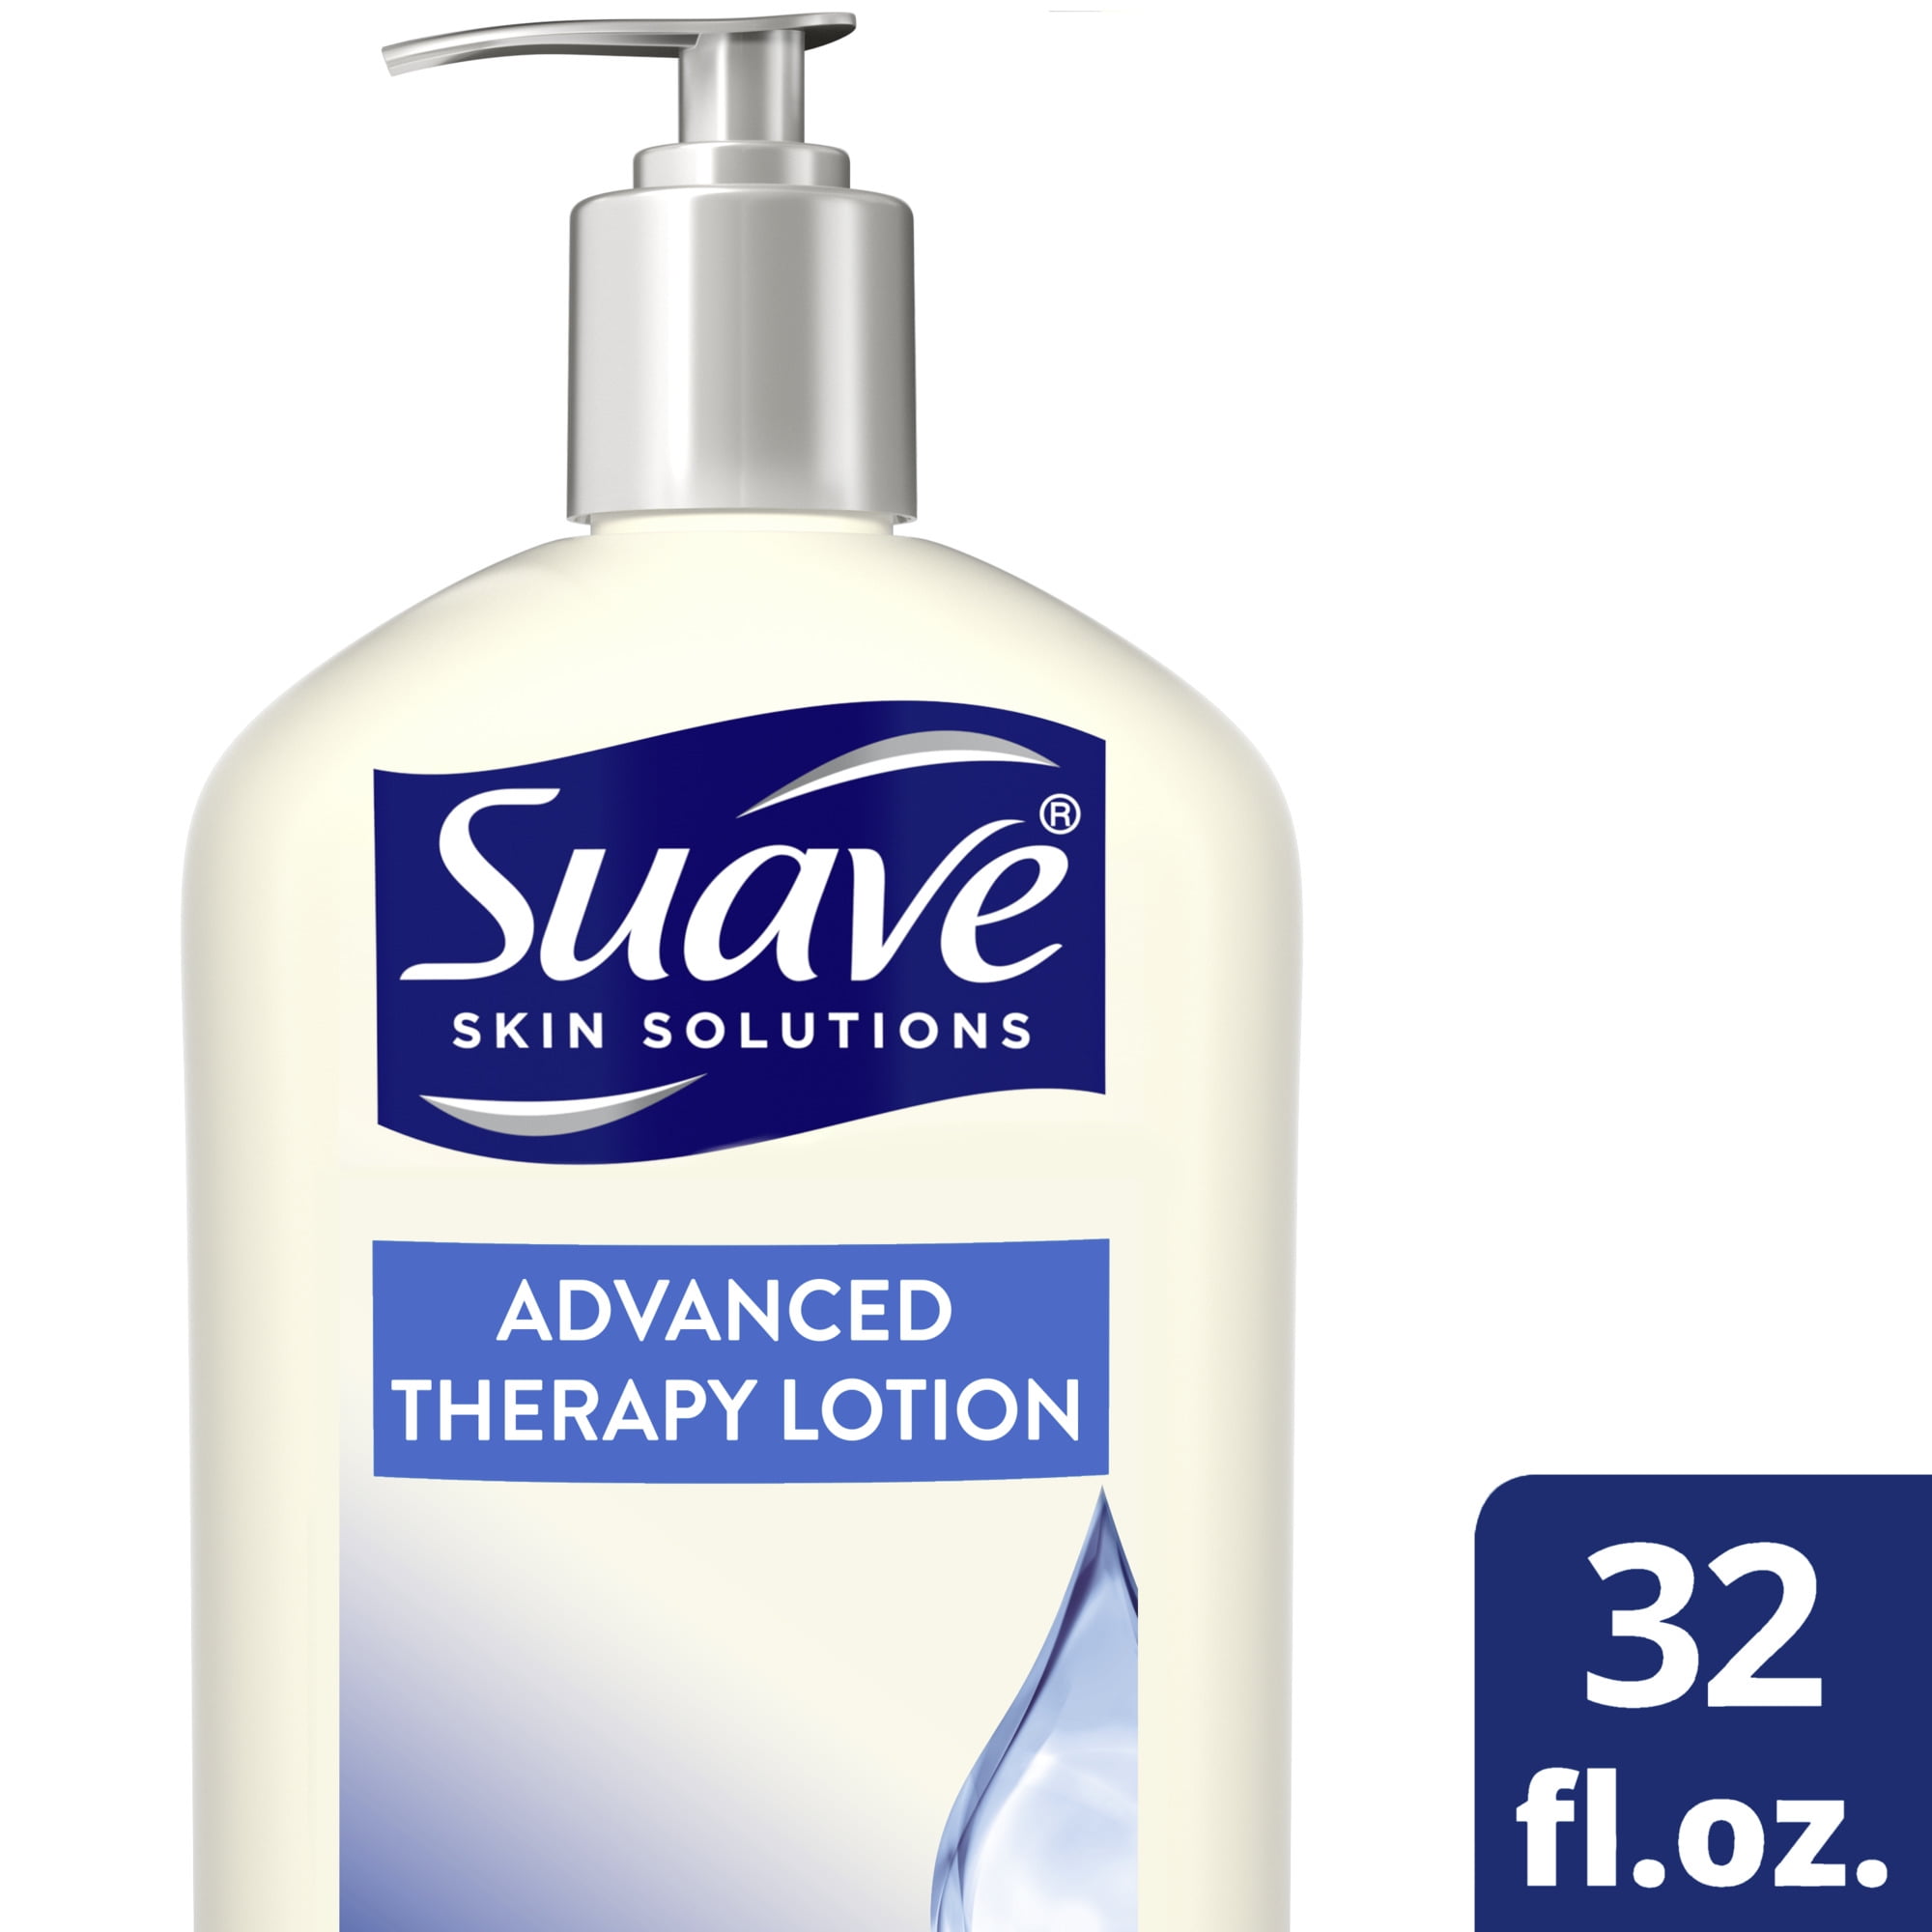 Aquatech Skin Care Premium w Optiphen Body Lotion for All Skin Types, 1  Gallon